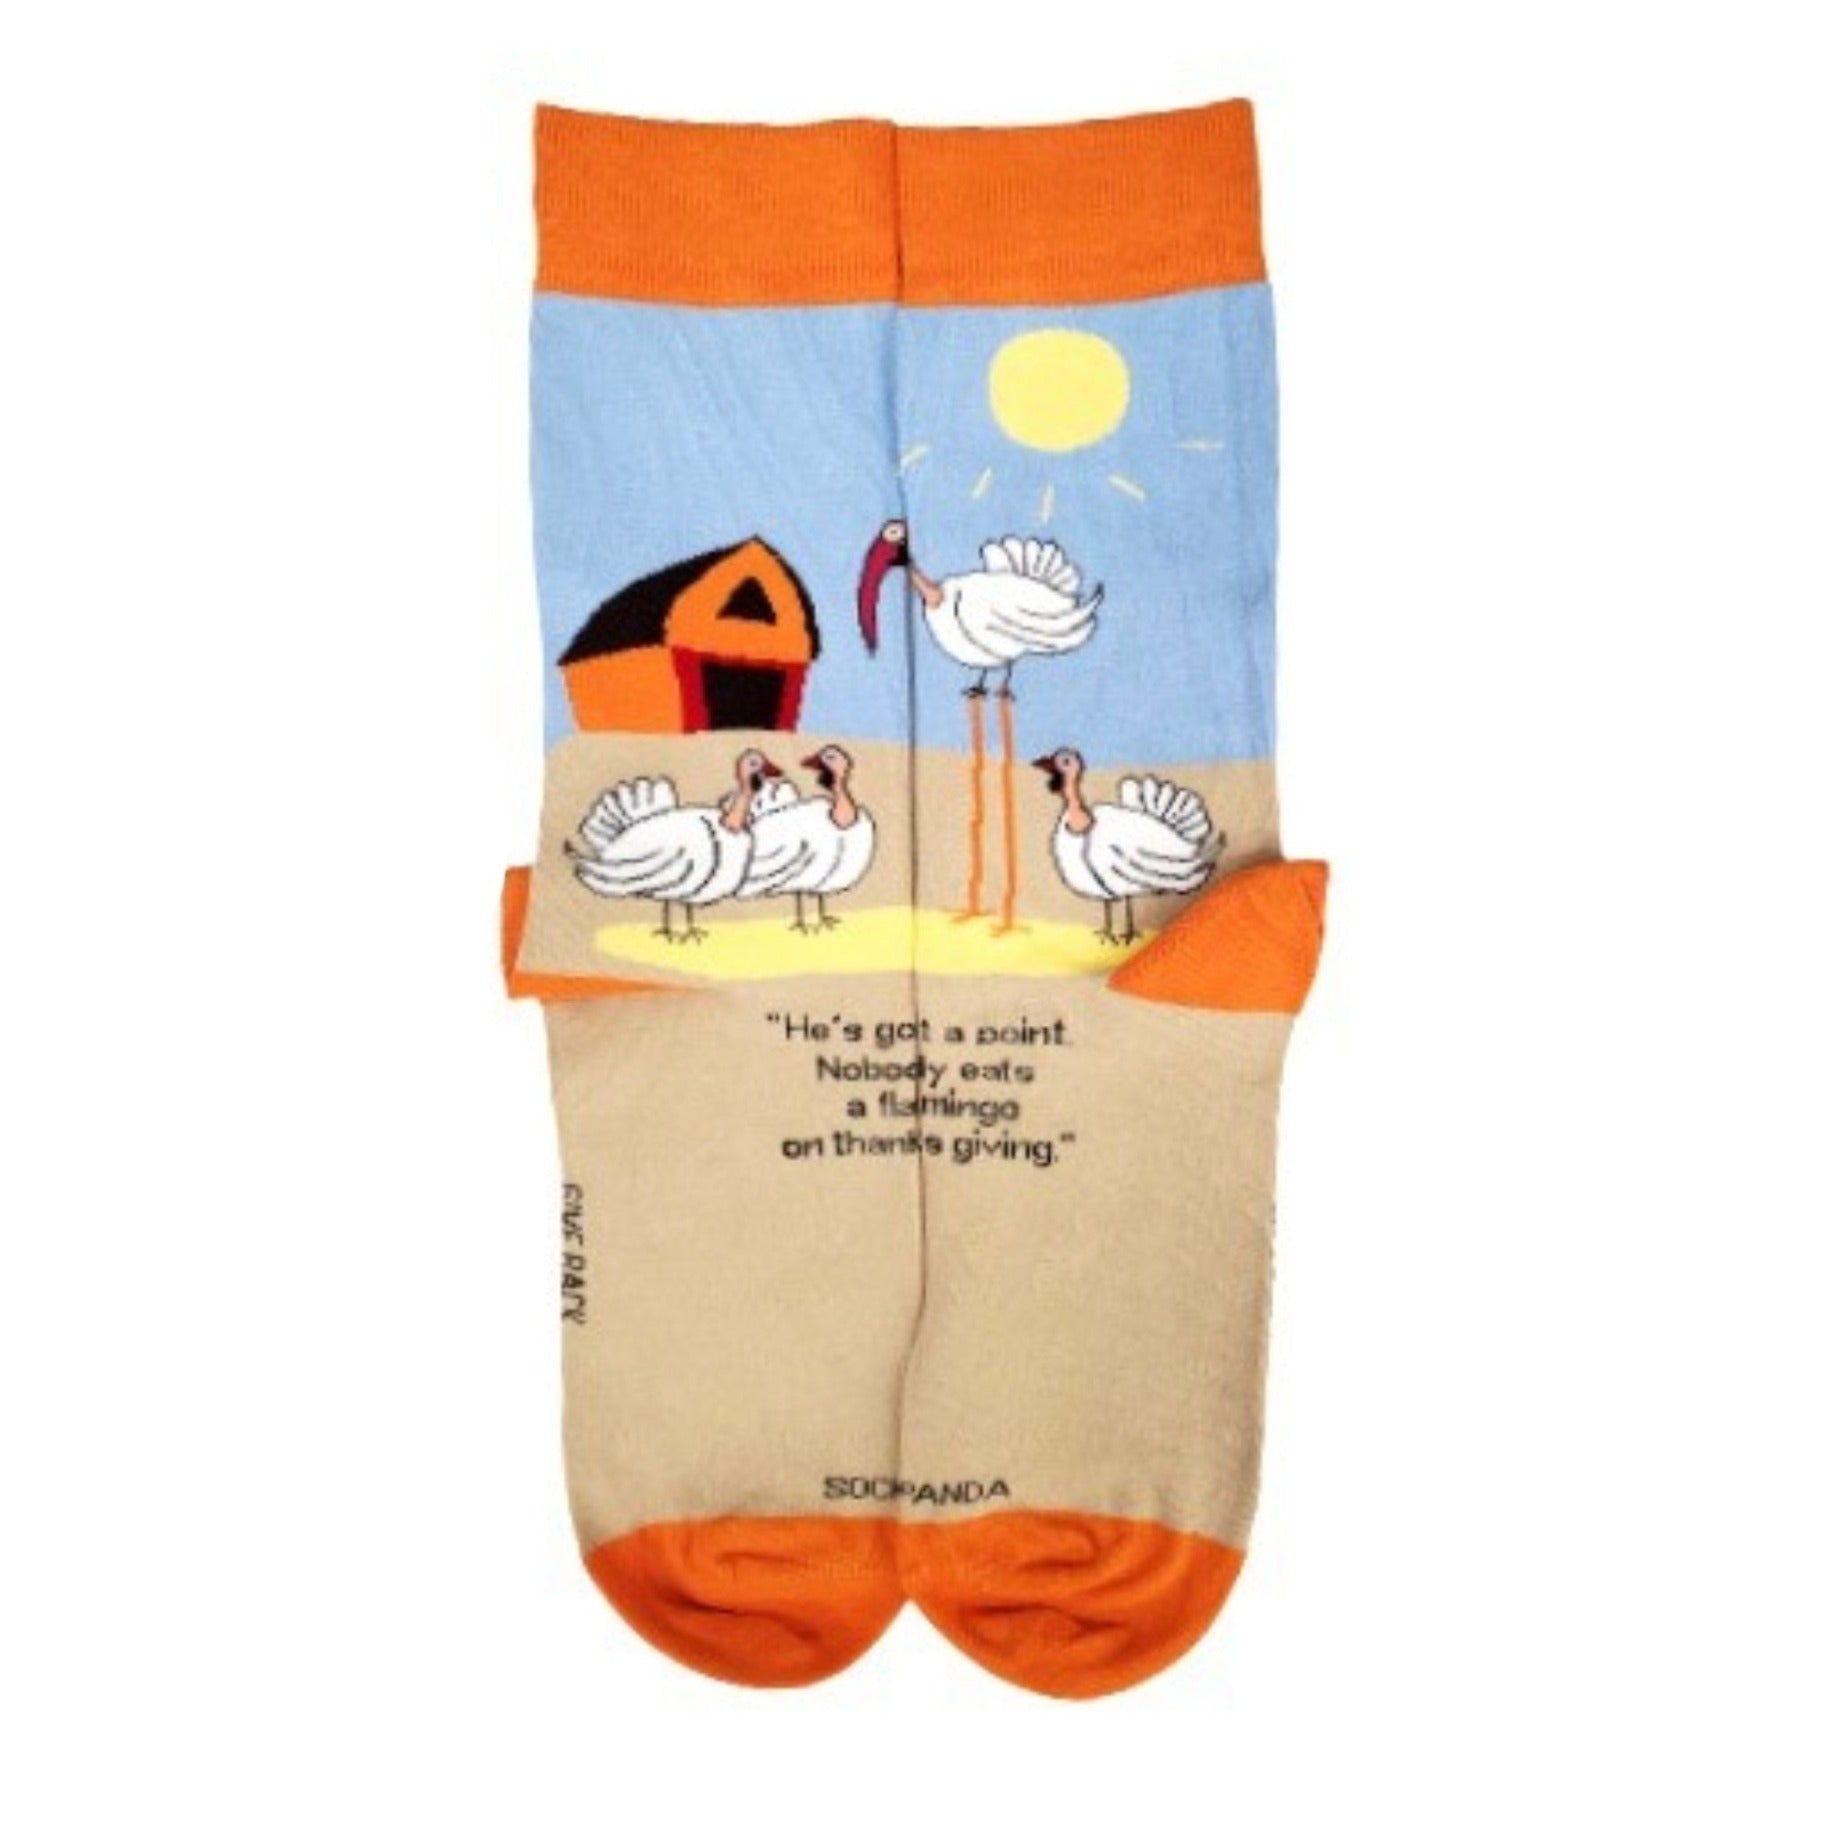 Comical Thanksgiving Turkey Socks from the Sock Panda